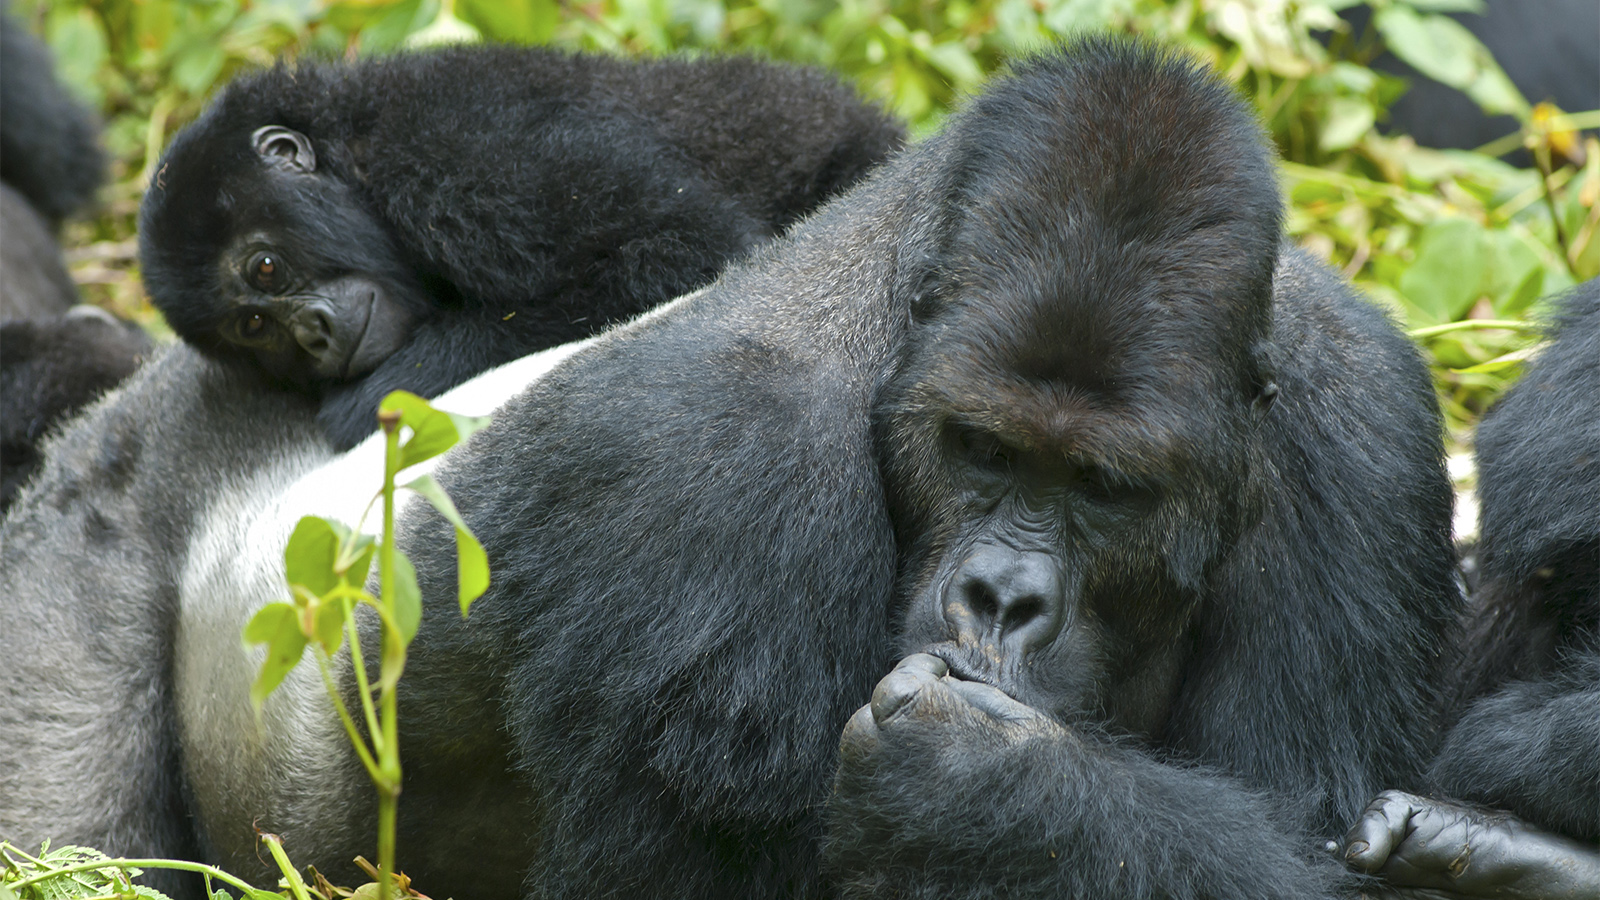 Where Do Gorillas Sleep, Eat & Conservation